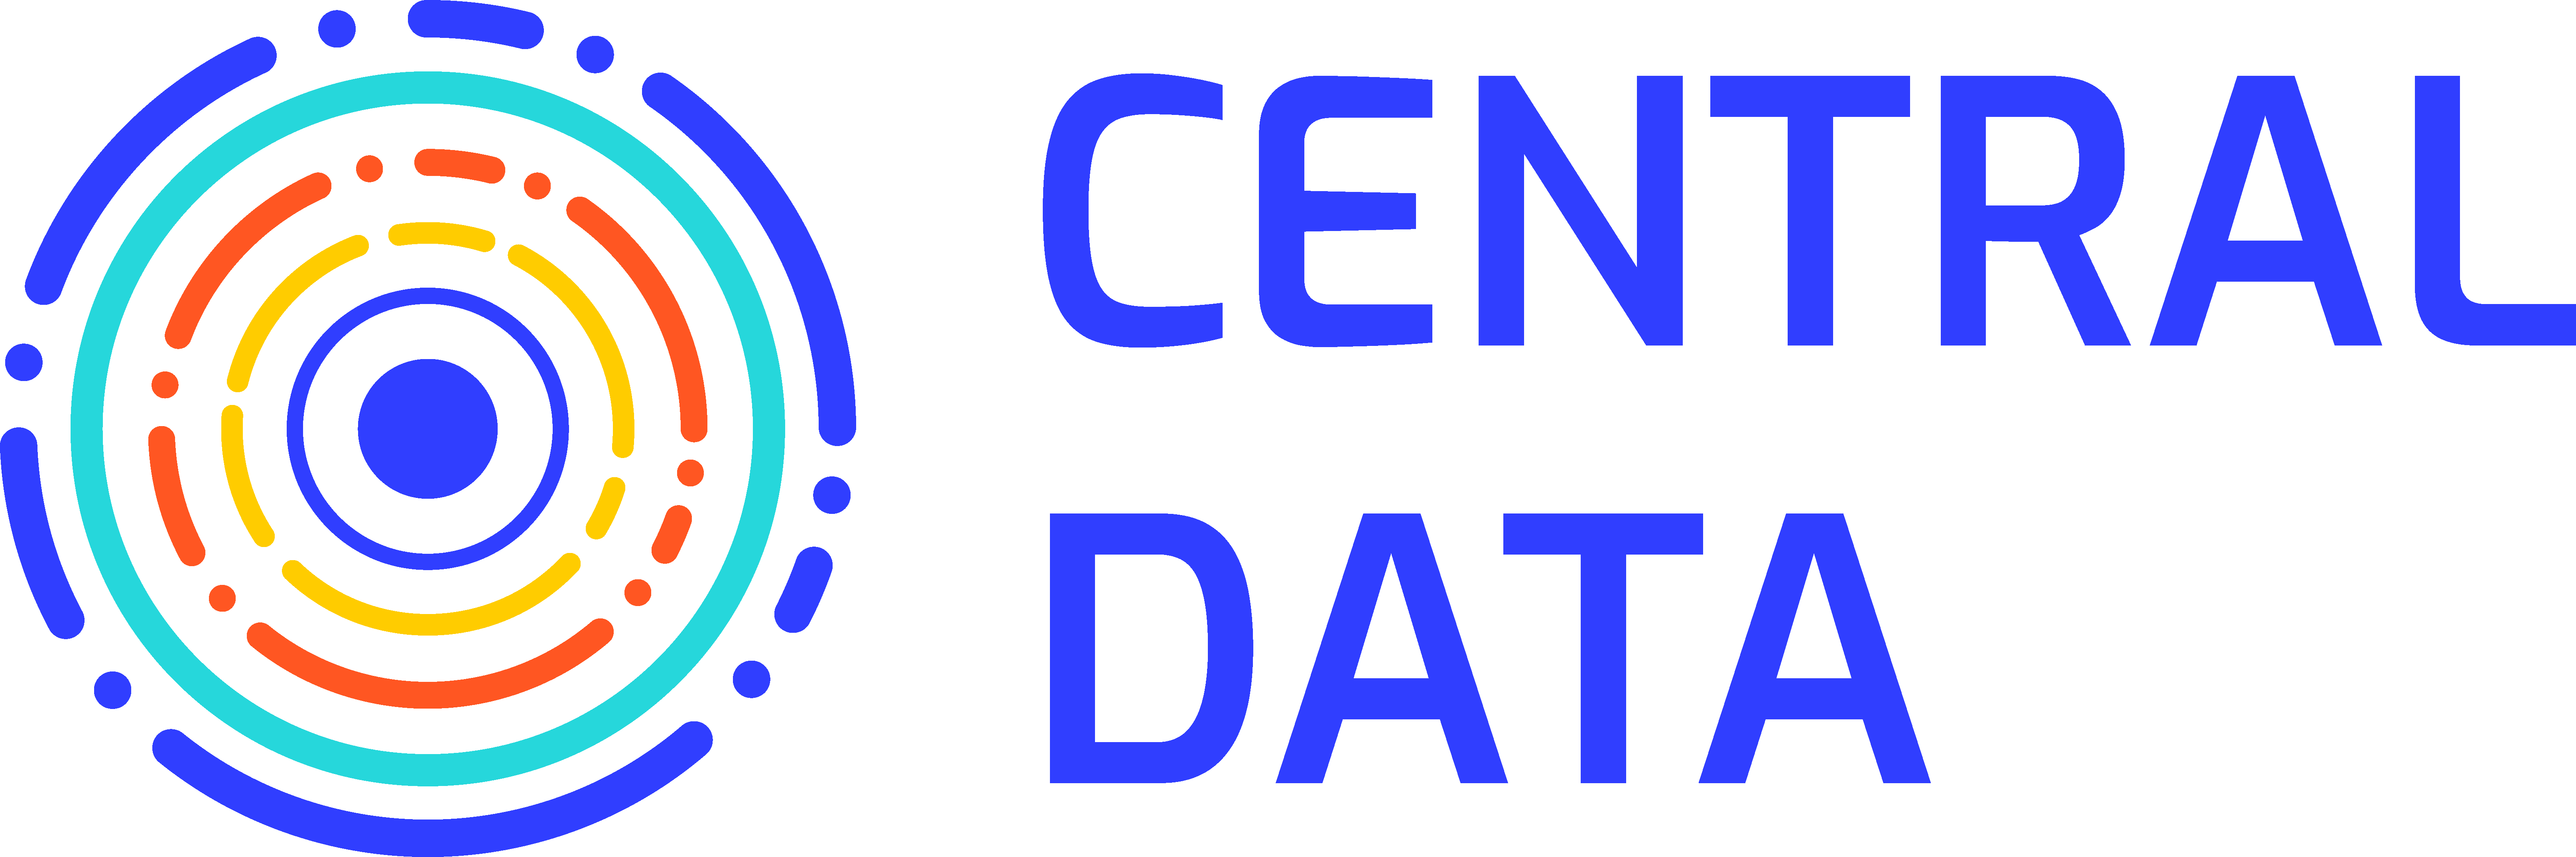 Central-Data Formation Power BI